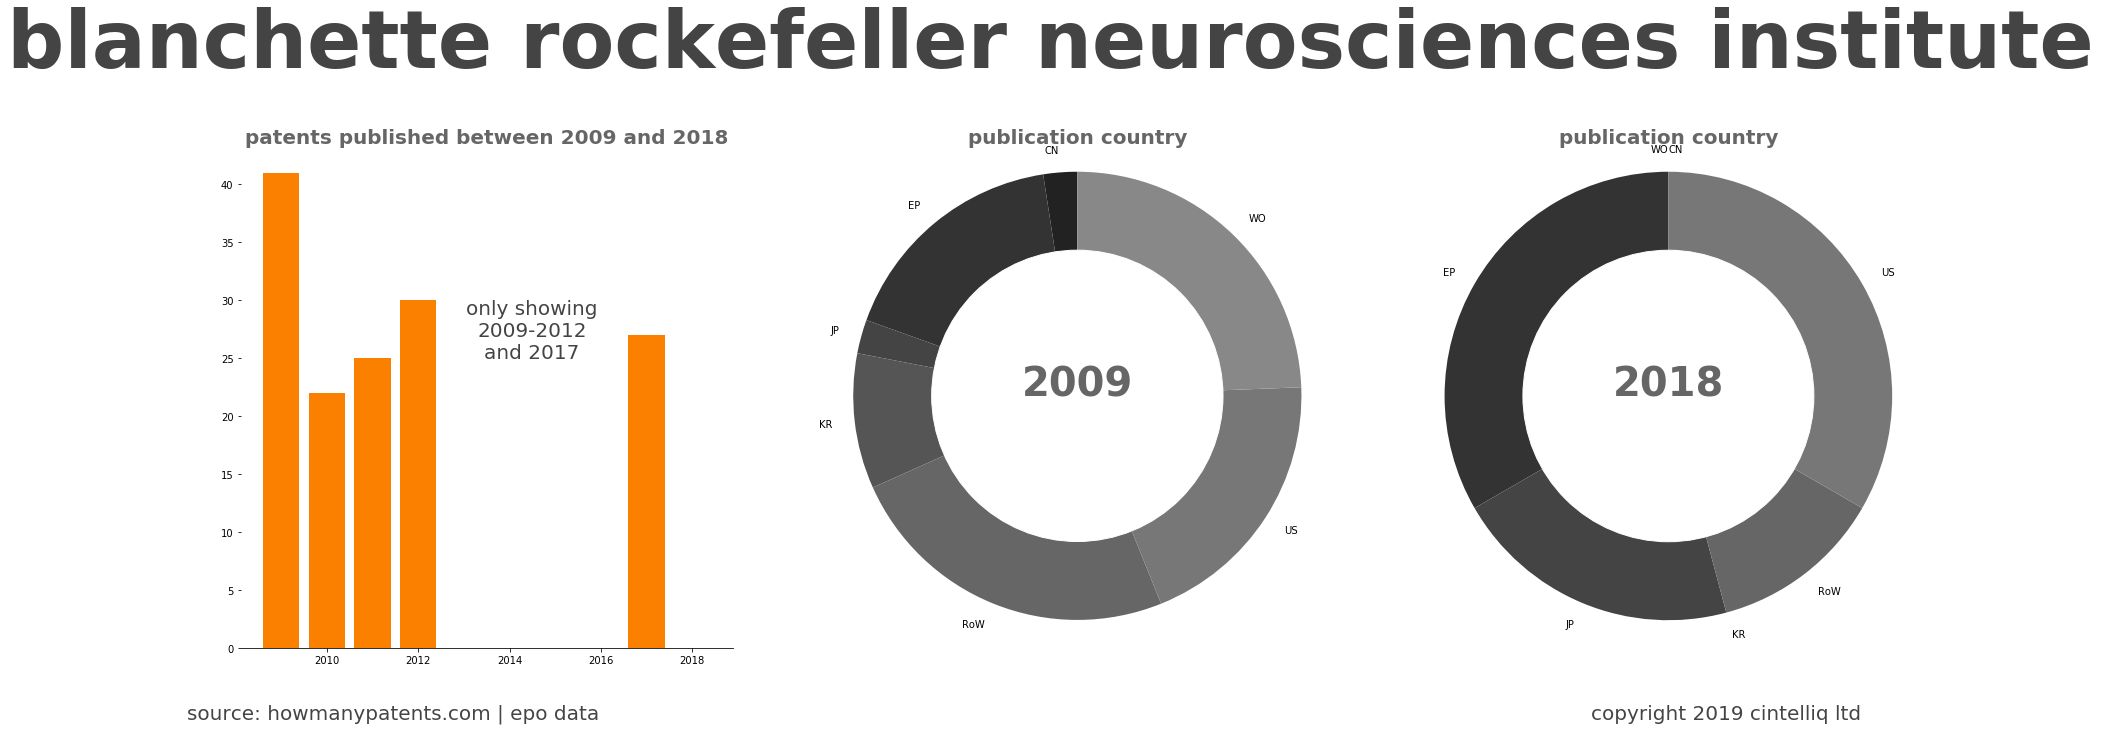 summary of patents for Blanchette Rockefeller Neurosciences Institute